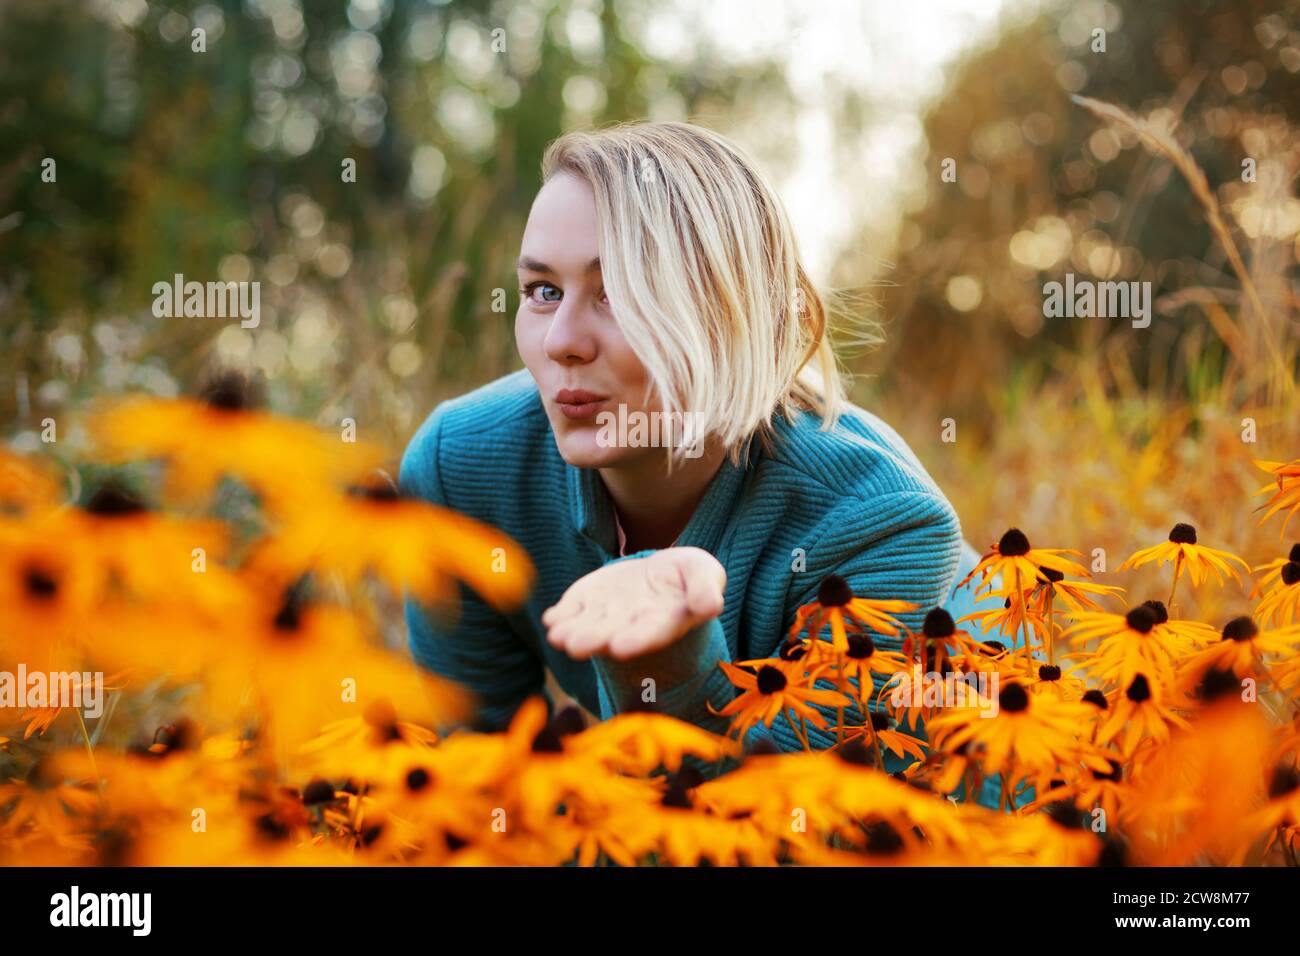 blonde caucasian female with bob haircut blows kiss. Autumn woman portrait with bright orange flowers Stock Photo